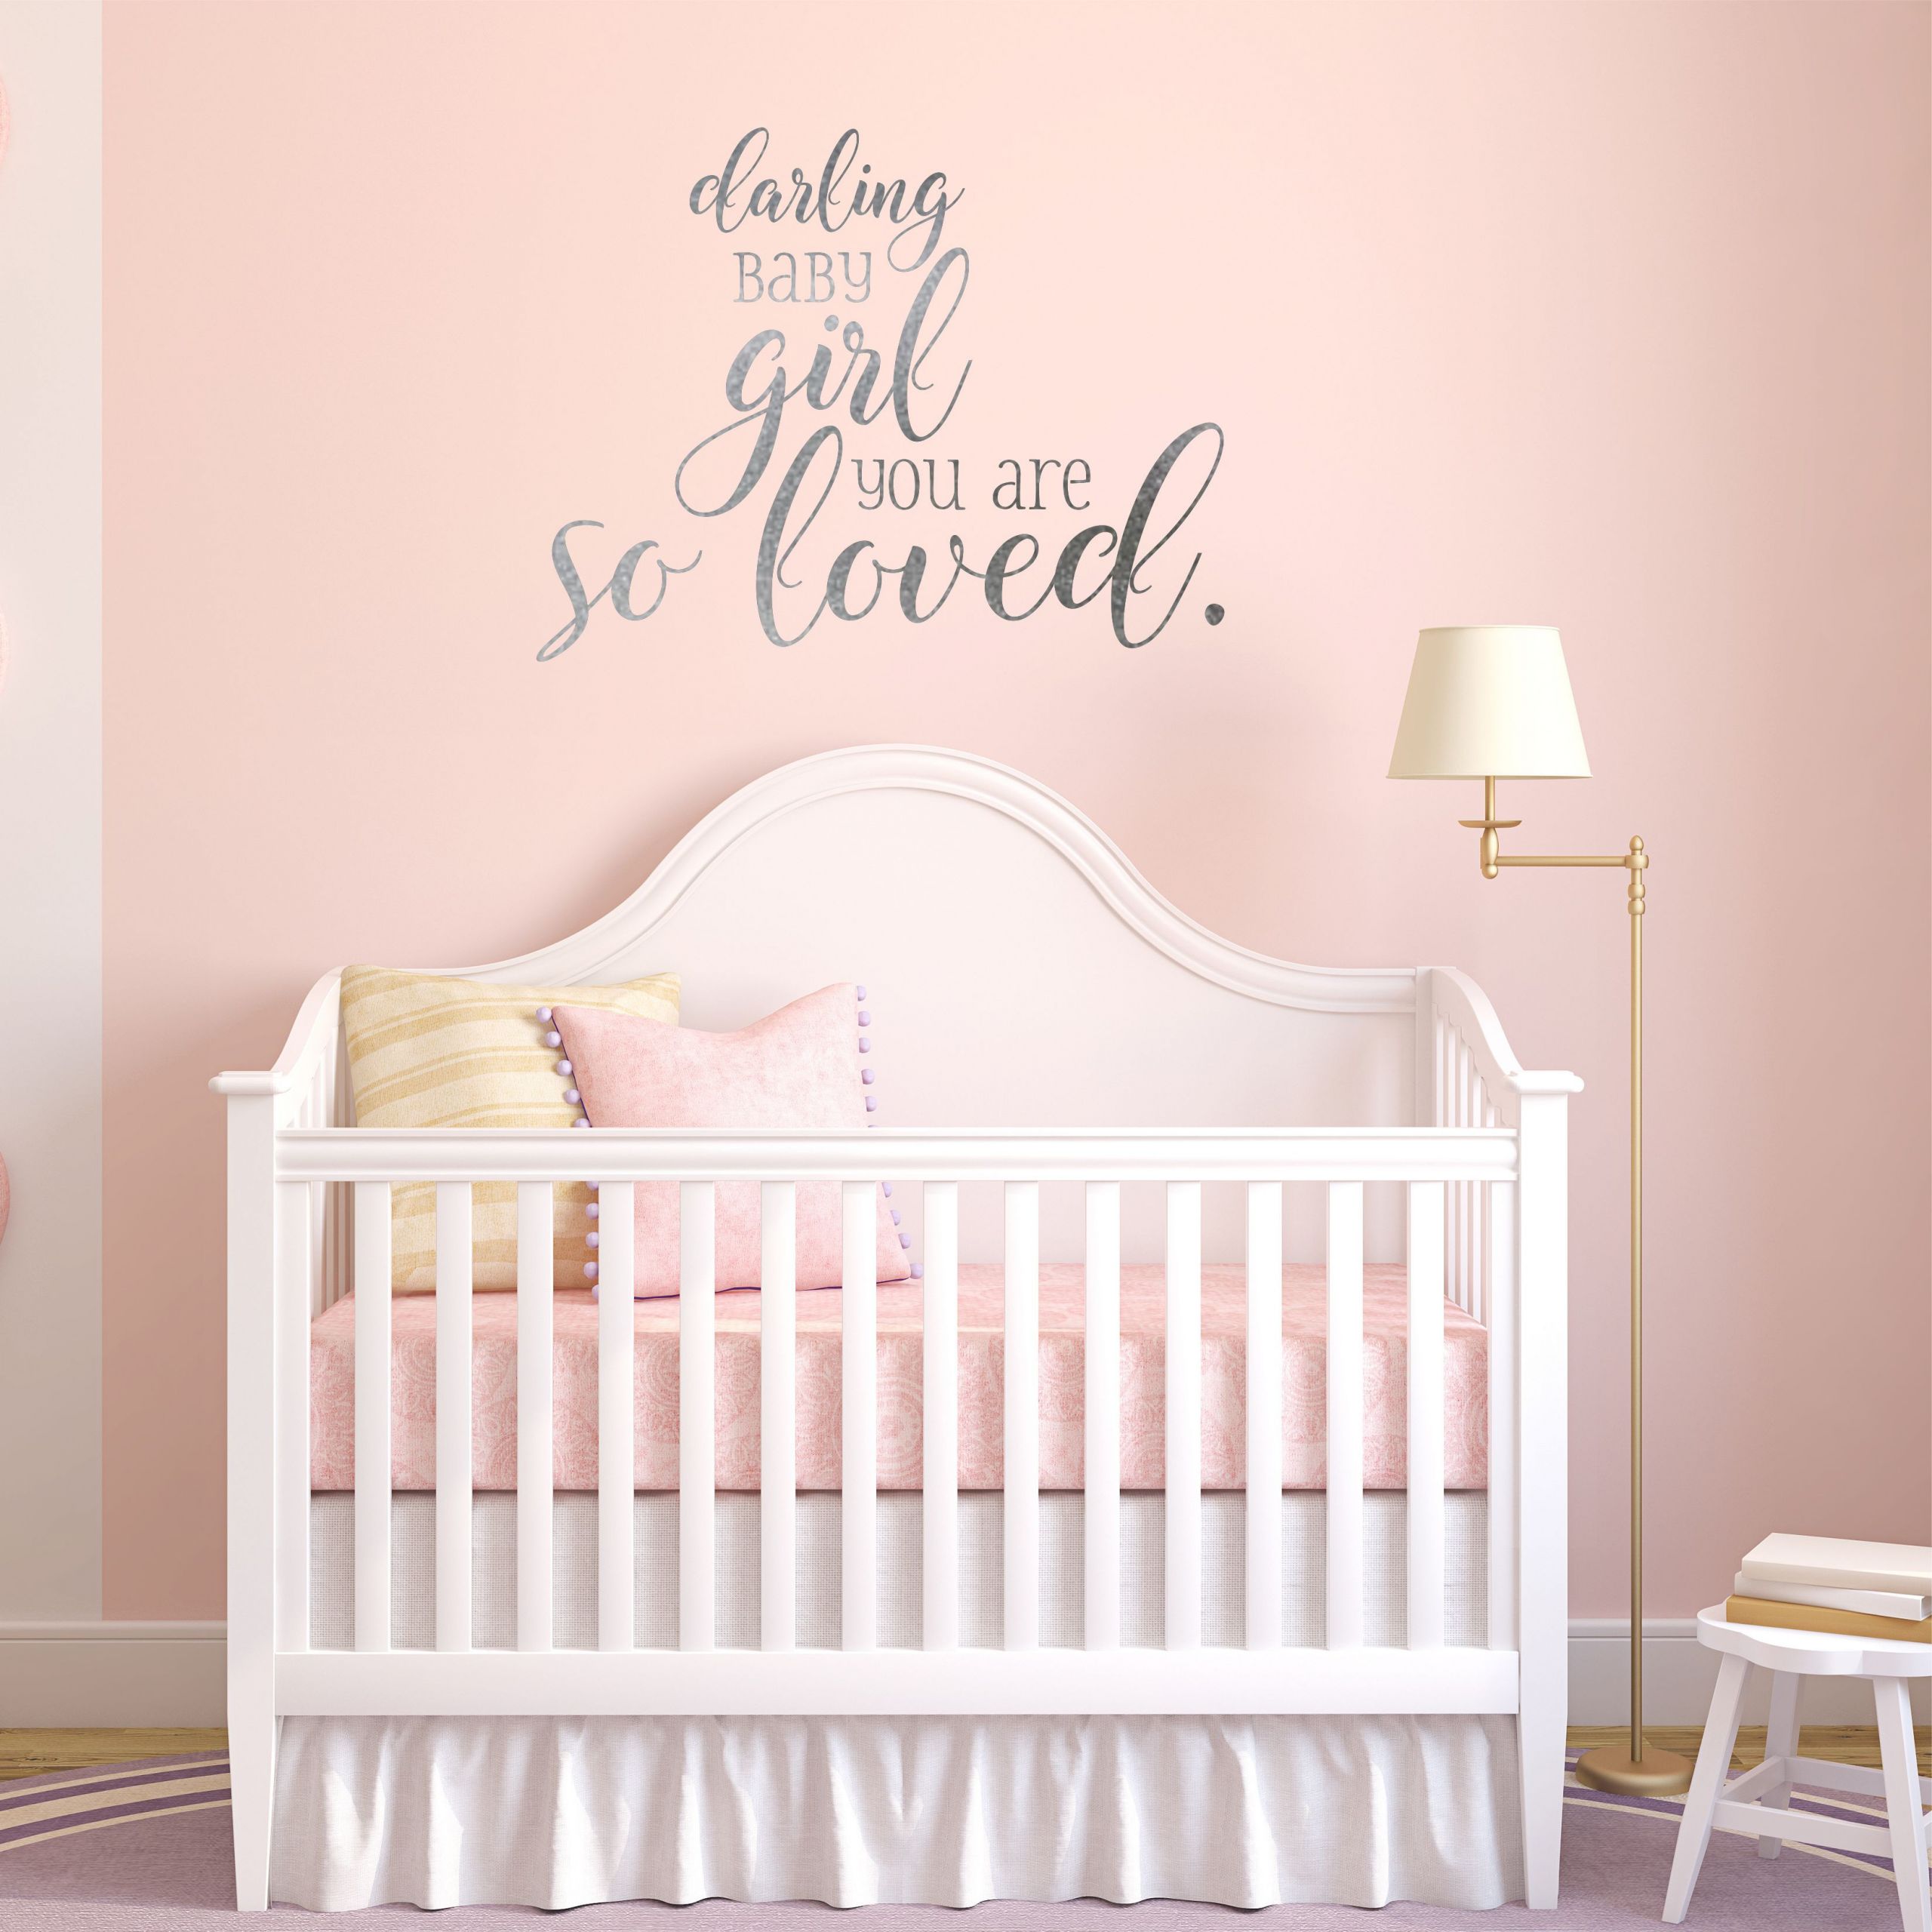 Baby Girl Nursery Wall Decor
 Darling Baby Girl Nursery Wall Decal A Great Impression